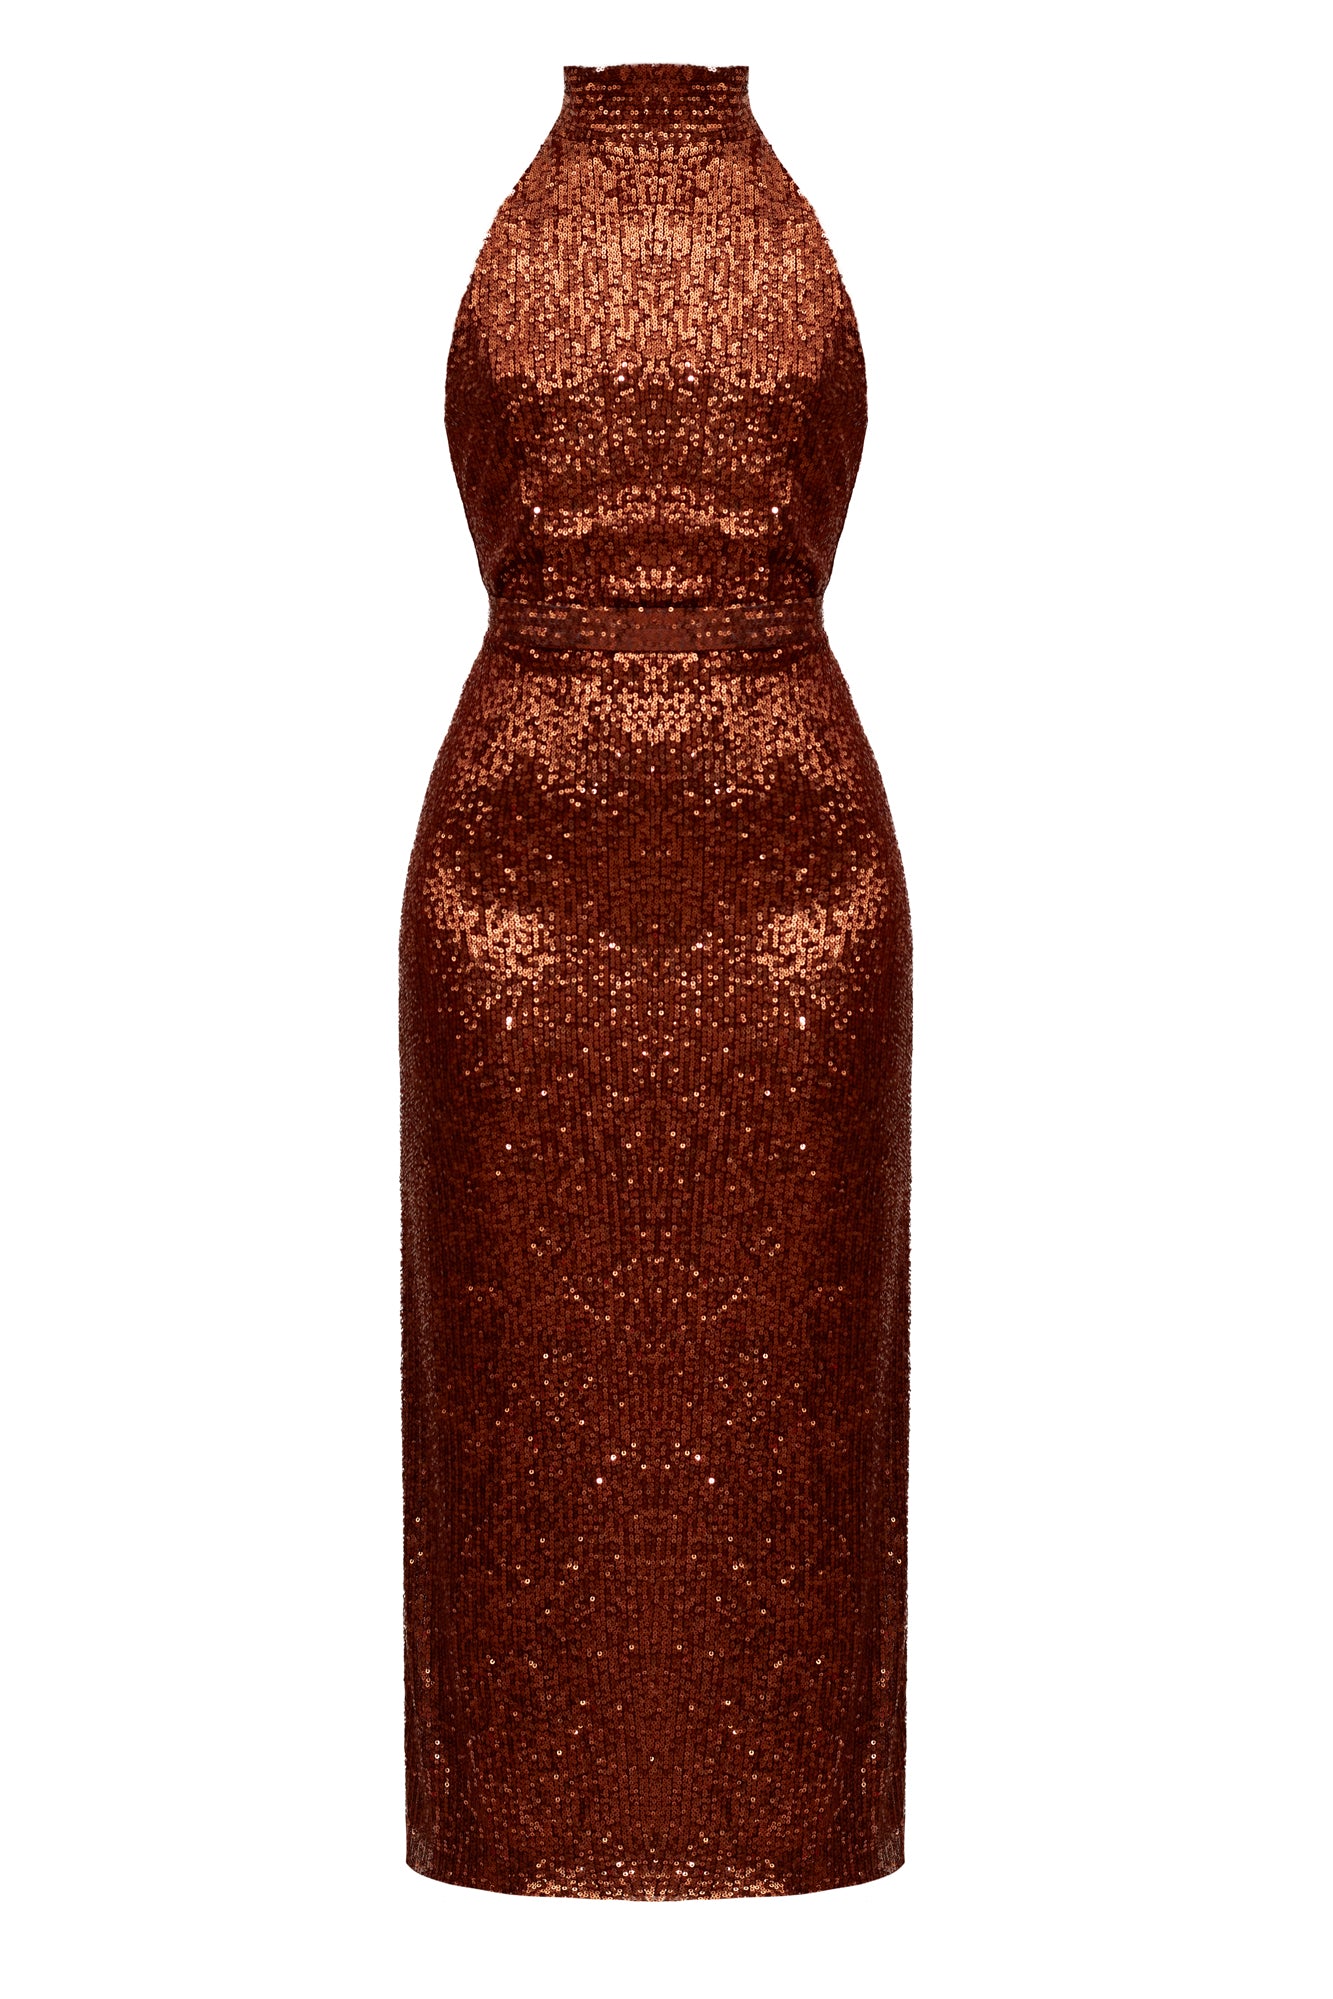 BRIANNA brown sequin bodycon midi dress with turtleneck